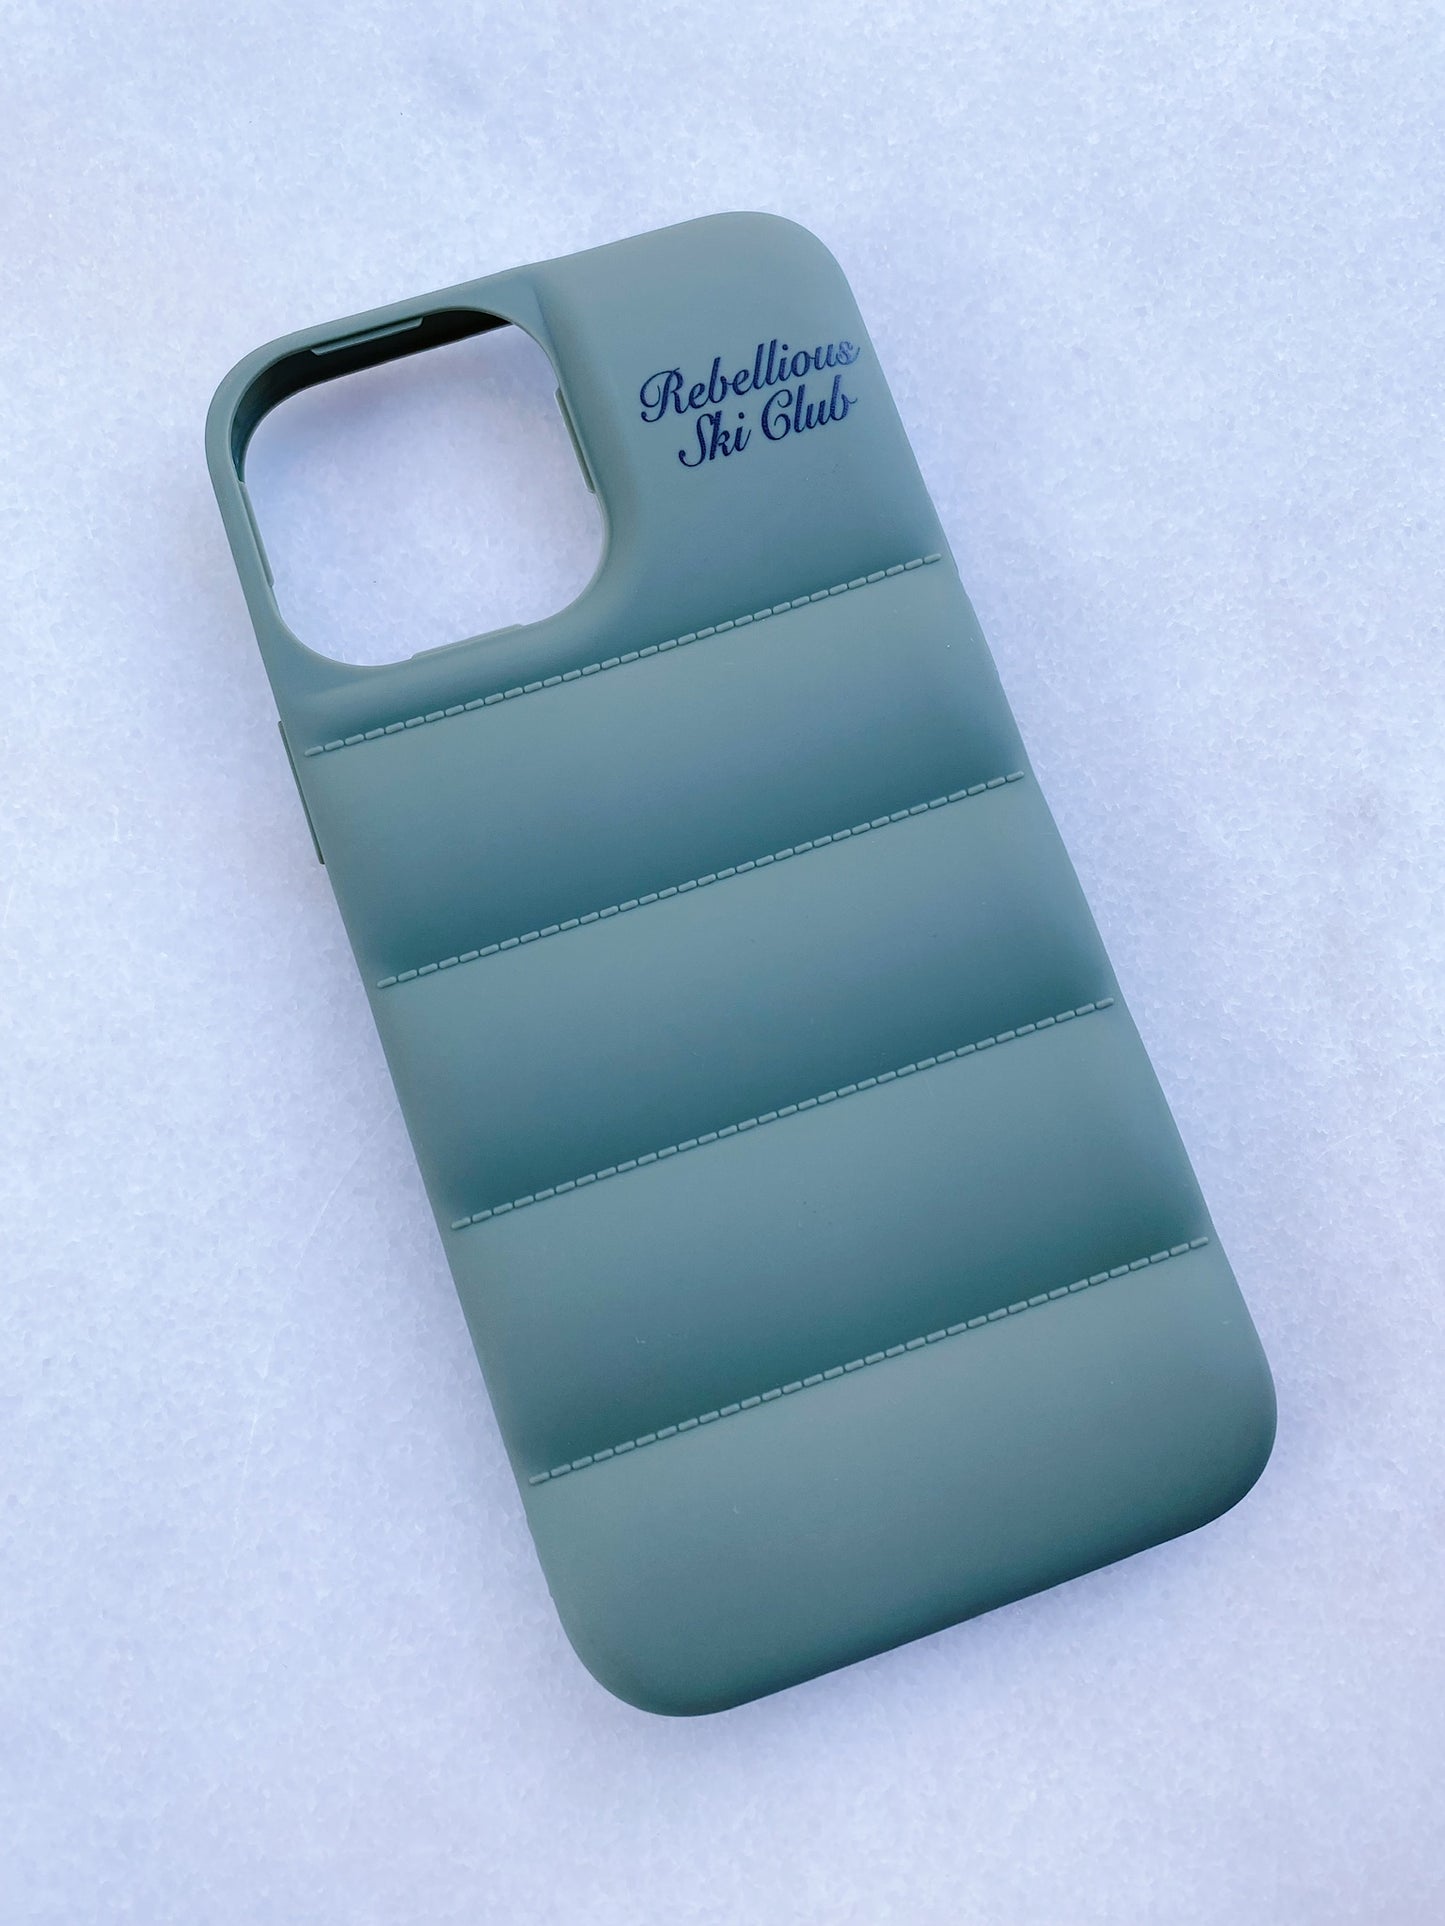 Rebellious Ski Club Puffer Phone Case